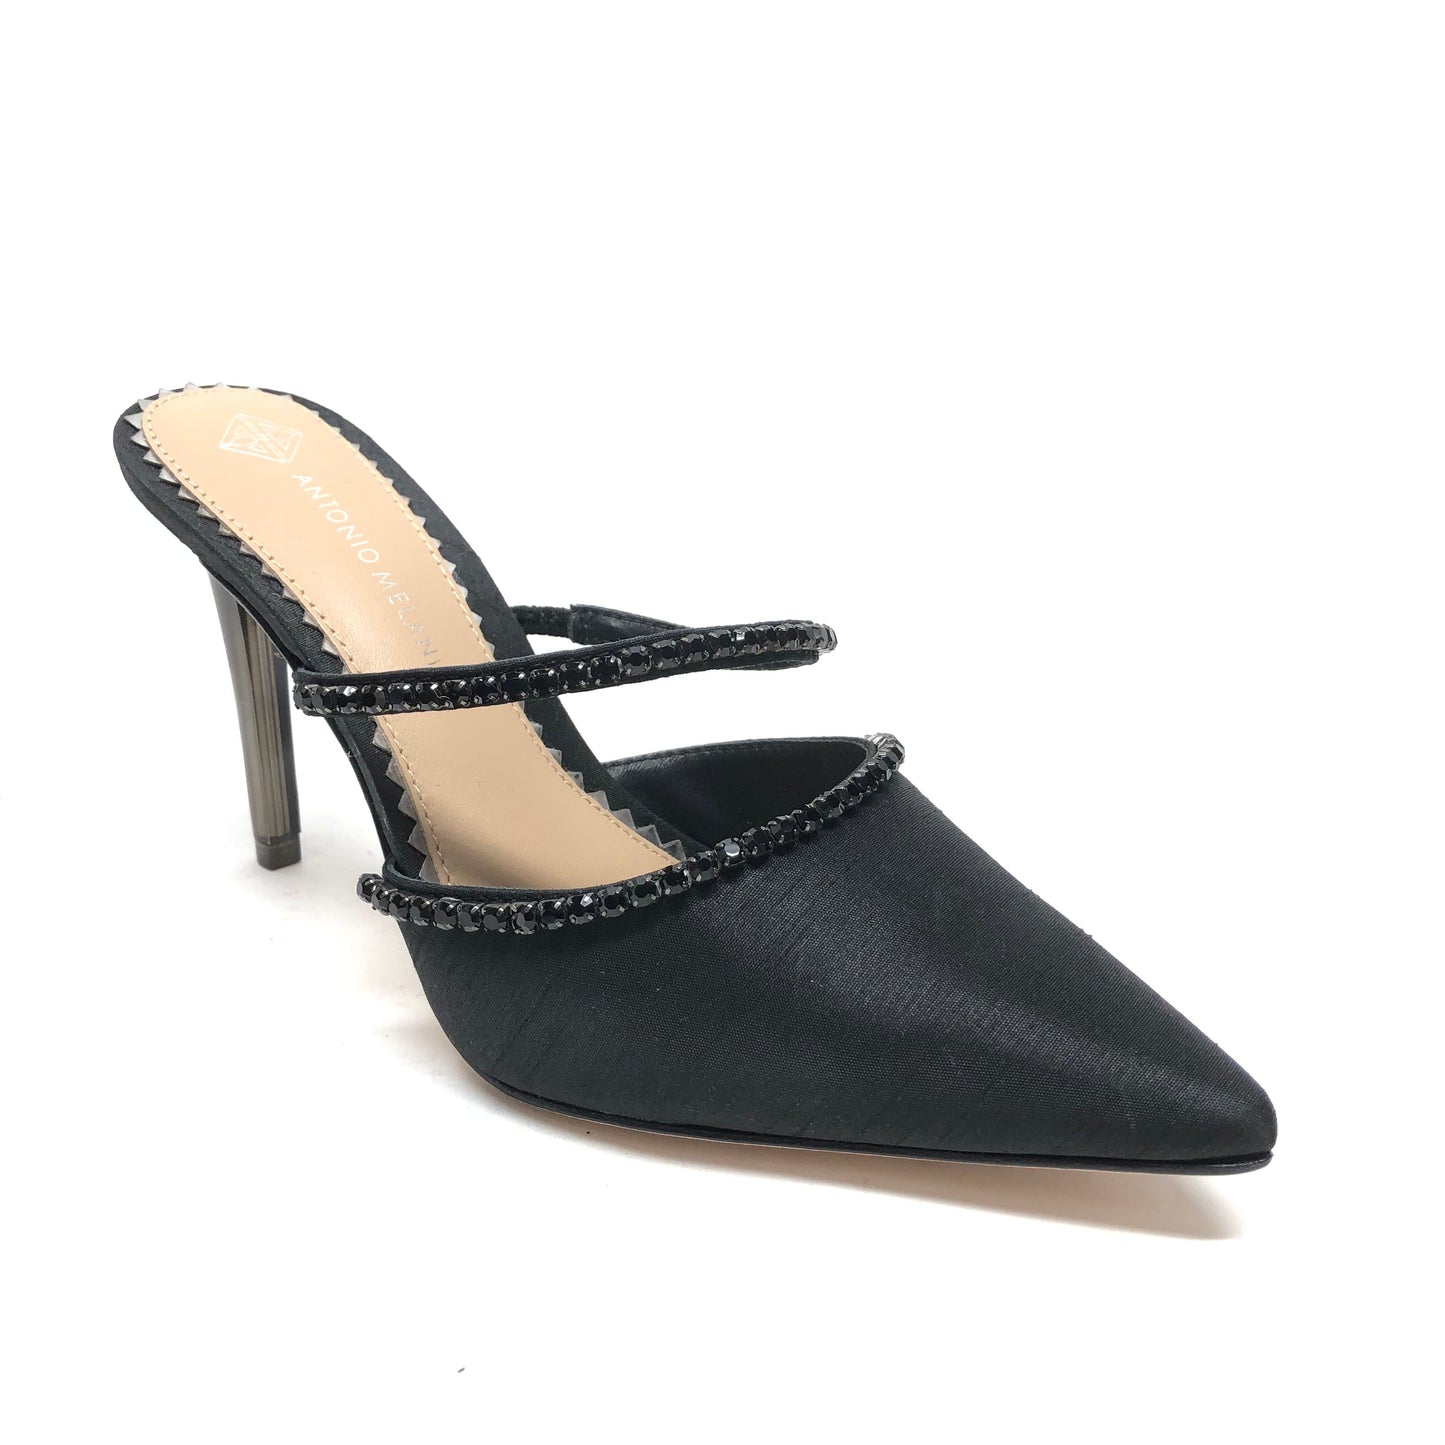 Shoes Heels Stiletto By Antonio Melani  Size: 5.5